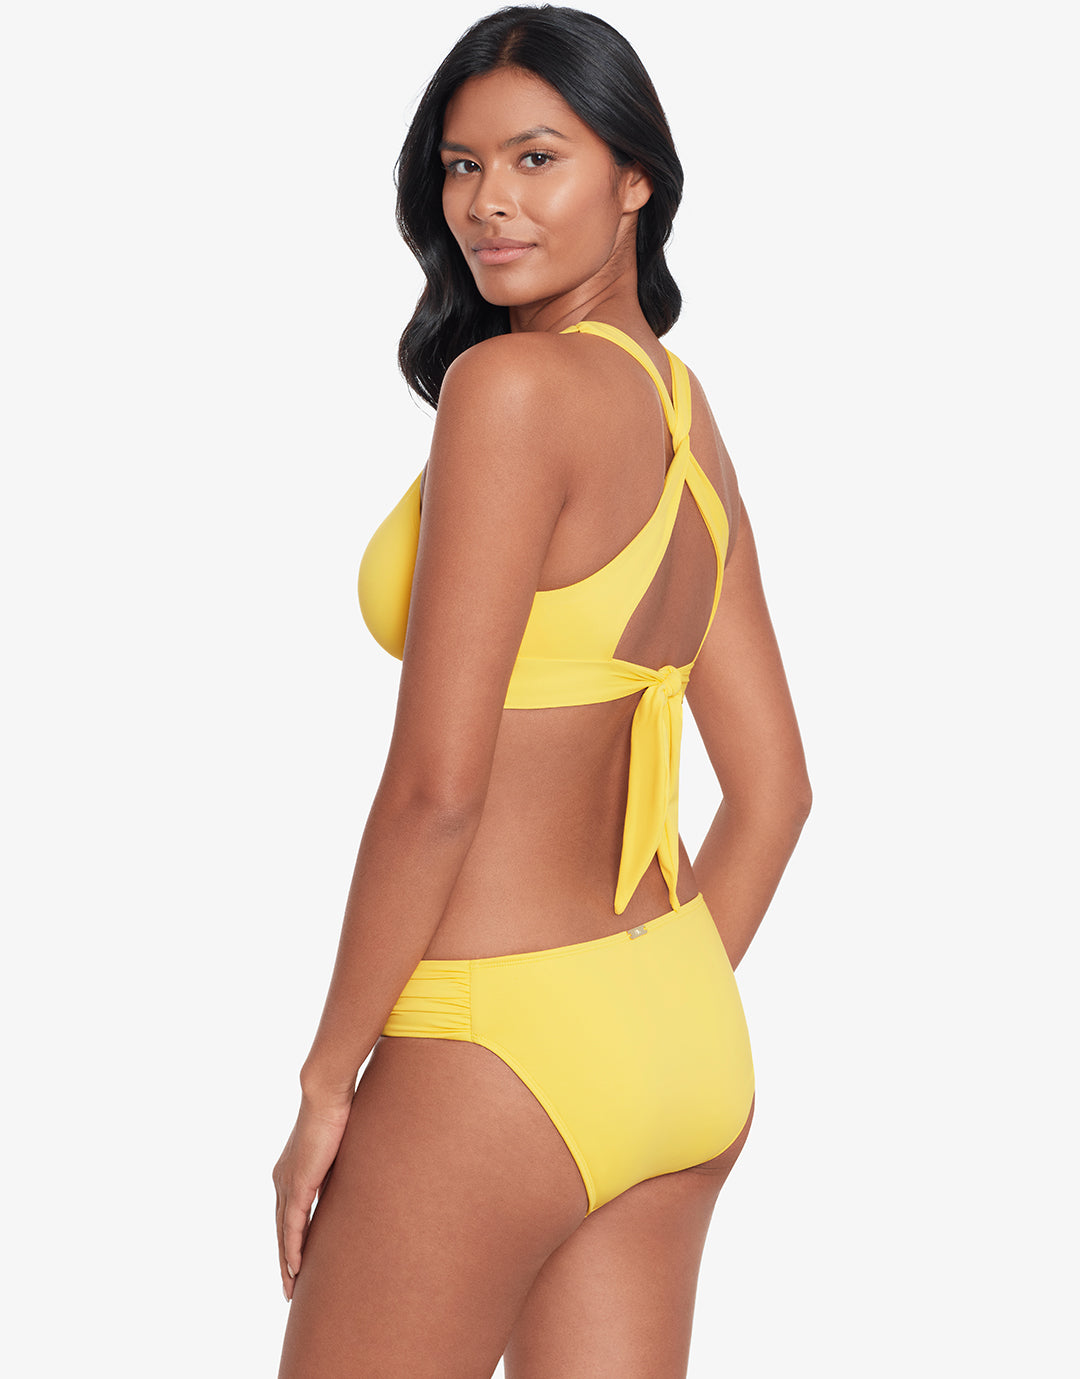 Beach Club Solids Twist X Back Bikini Top - Yellow - Simply Beach UK